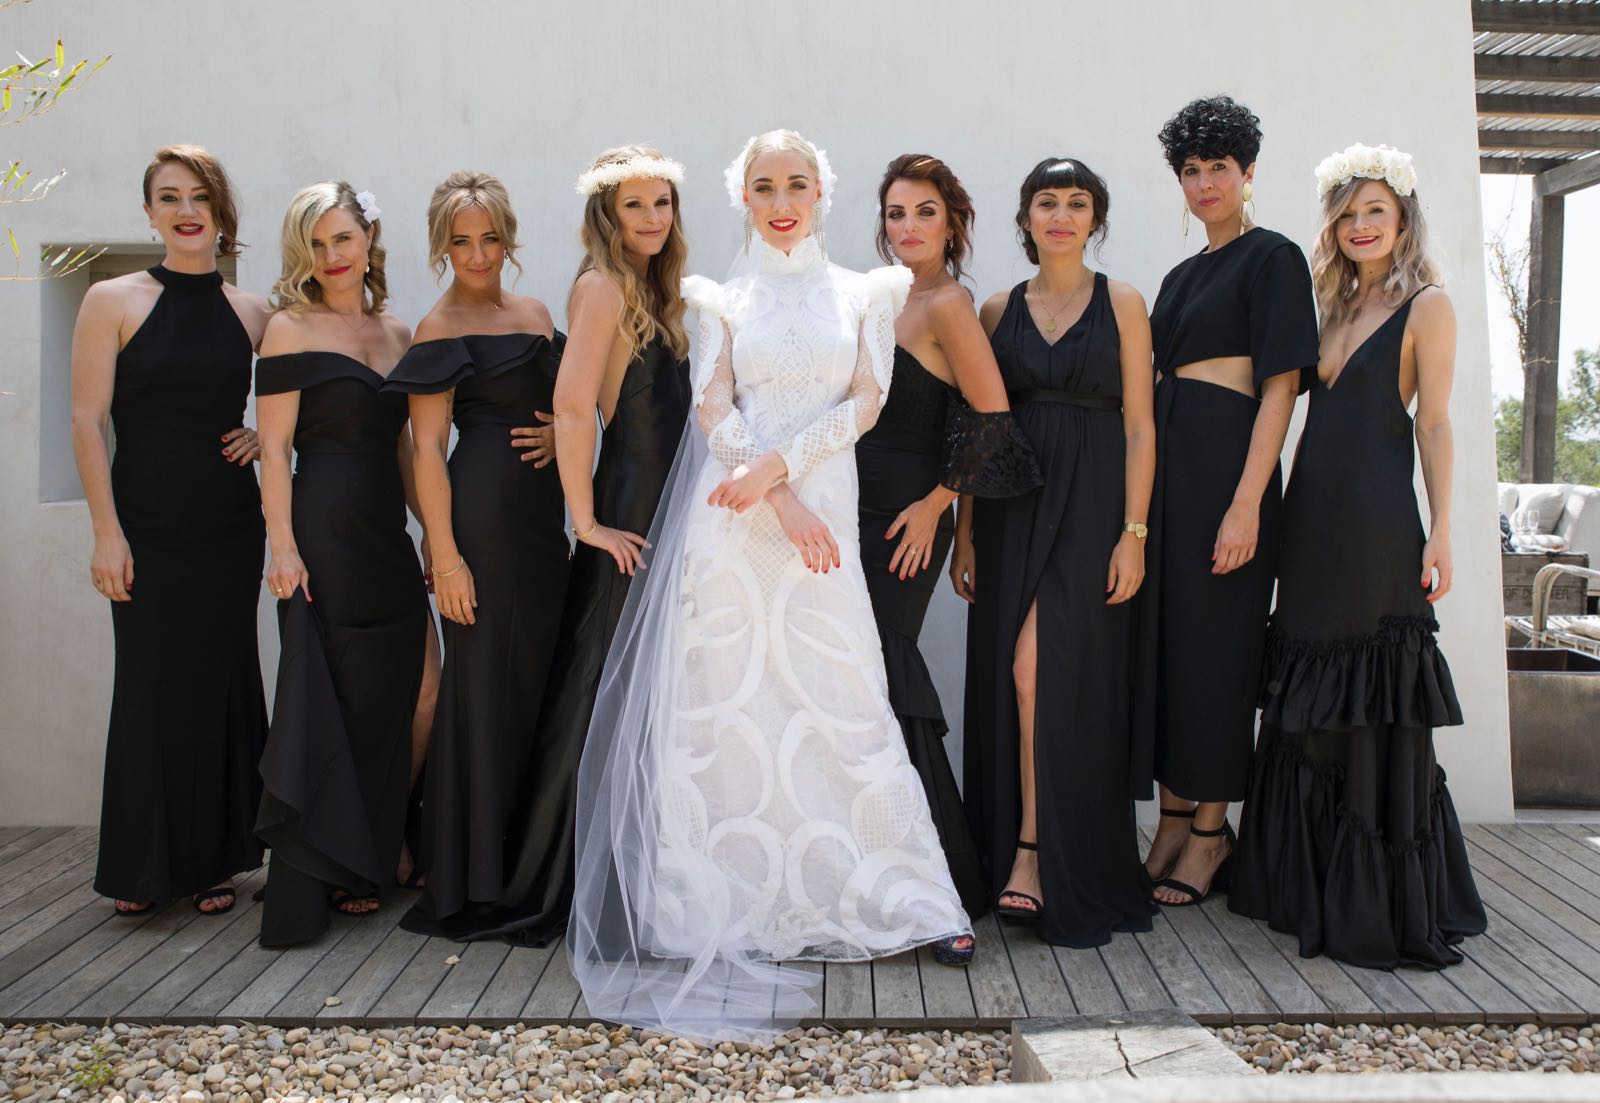 Meet Ibiza’s wedding beauty experts